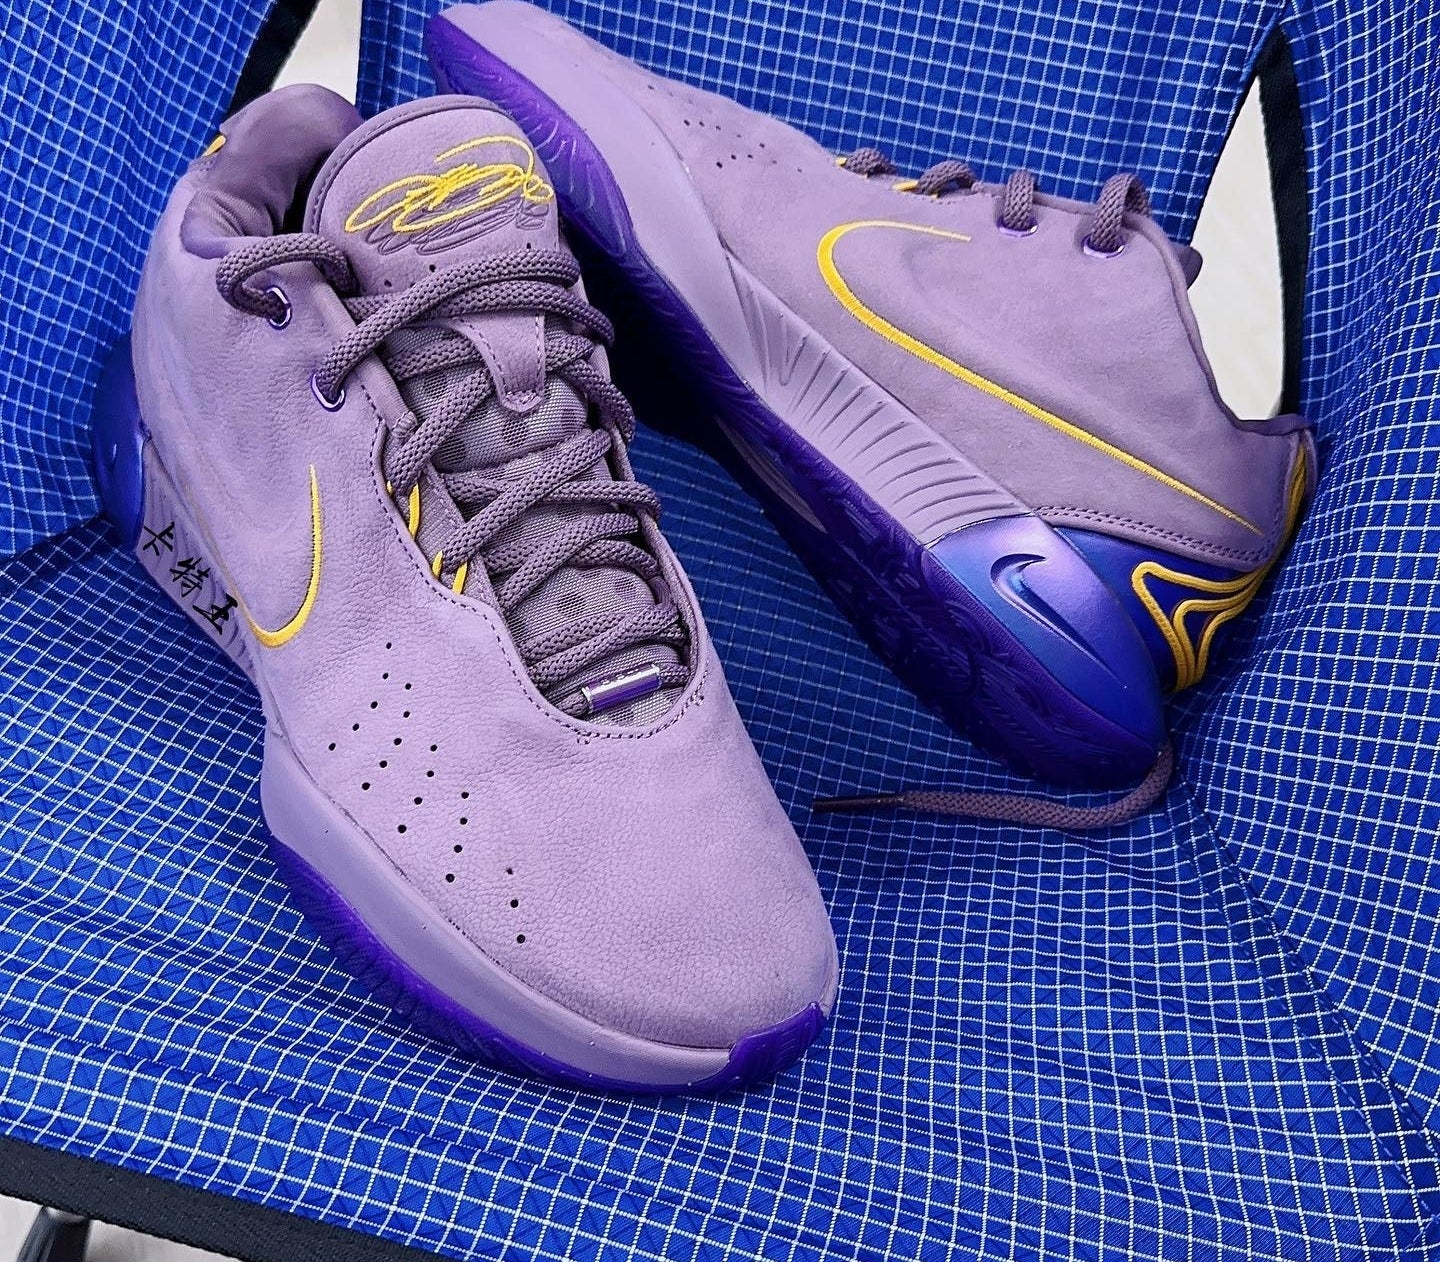 Nike: LeBron James shows off 21st signature shoe on Instagram